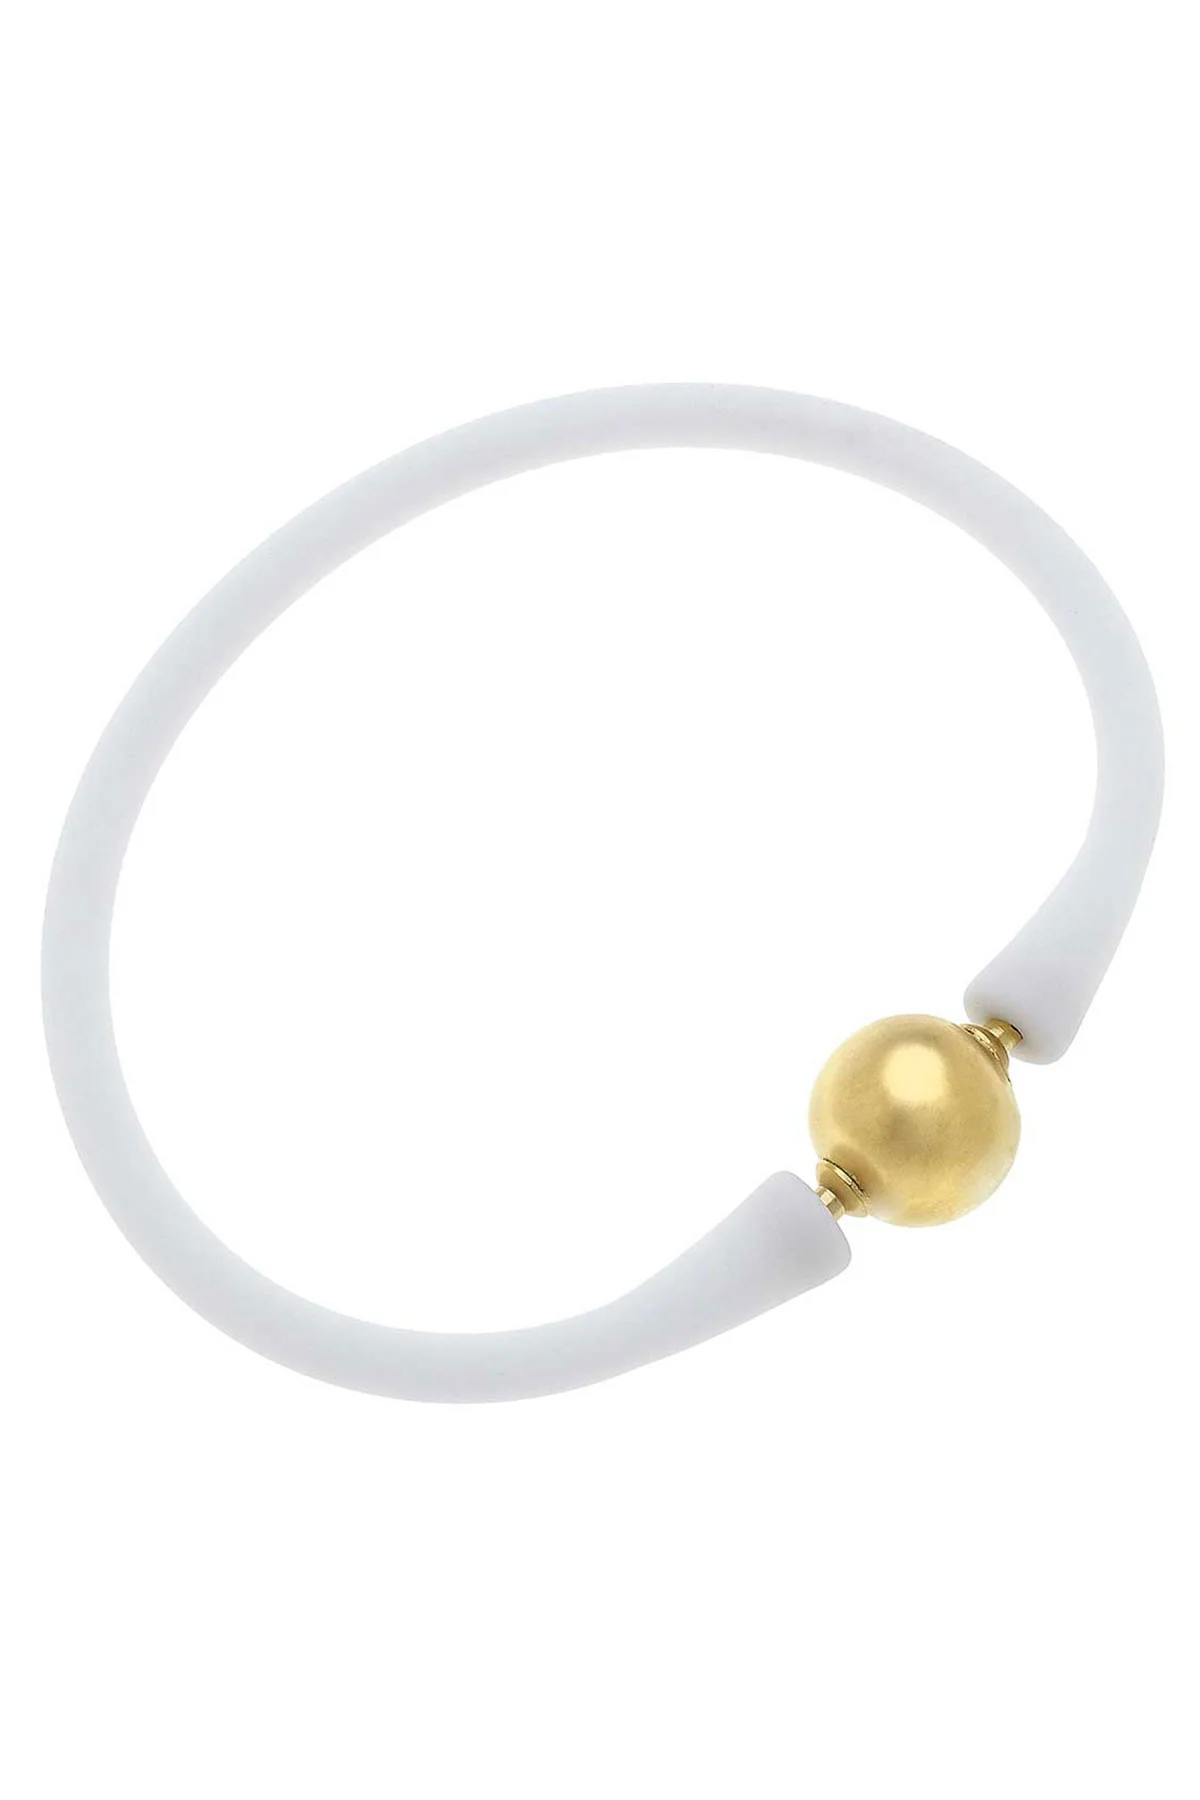 Bali 24K Plated Ball Bead Silicone Bracelet-White